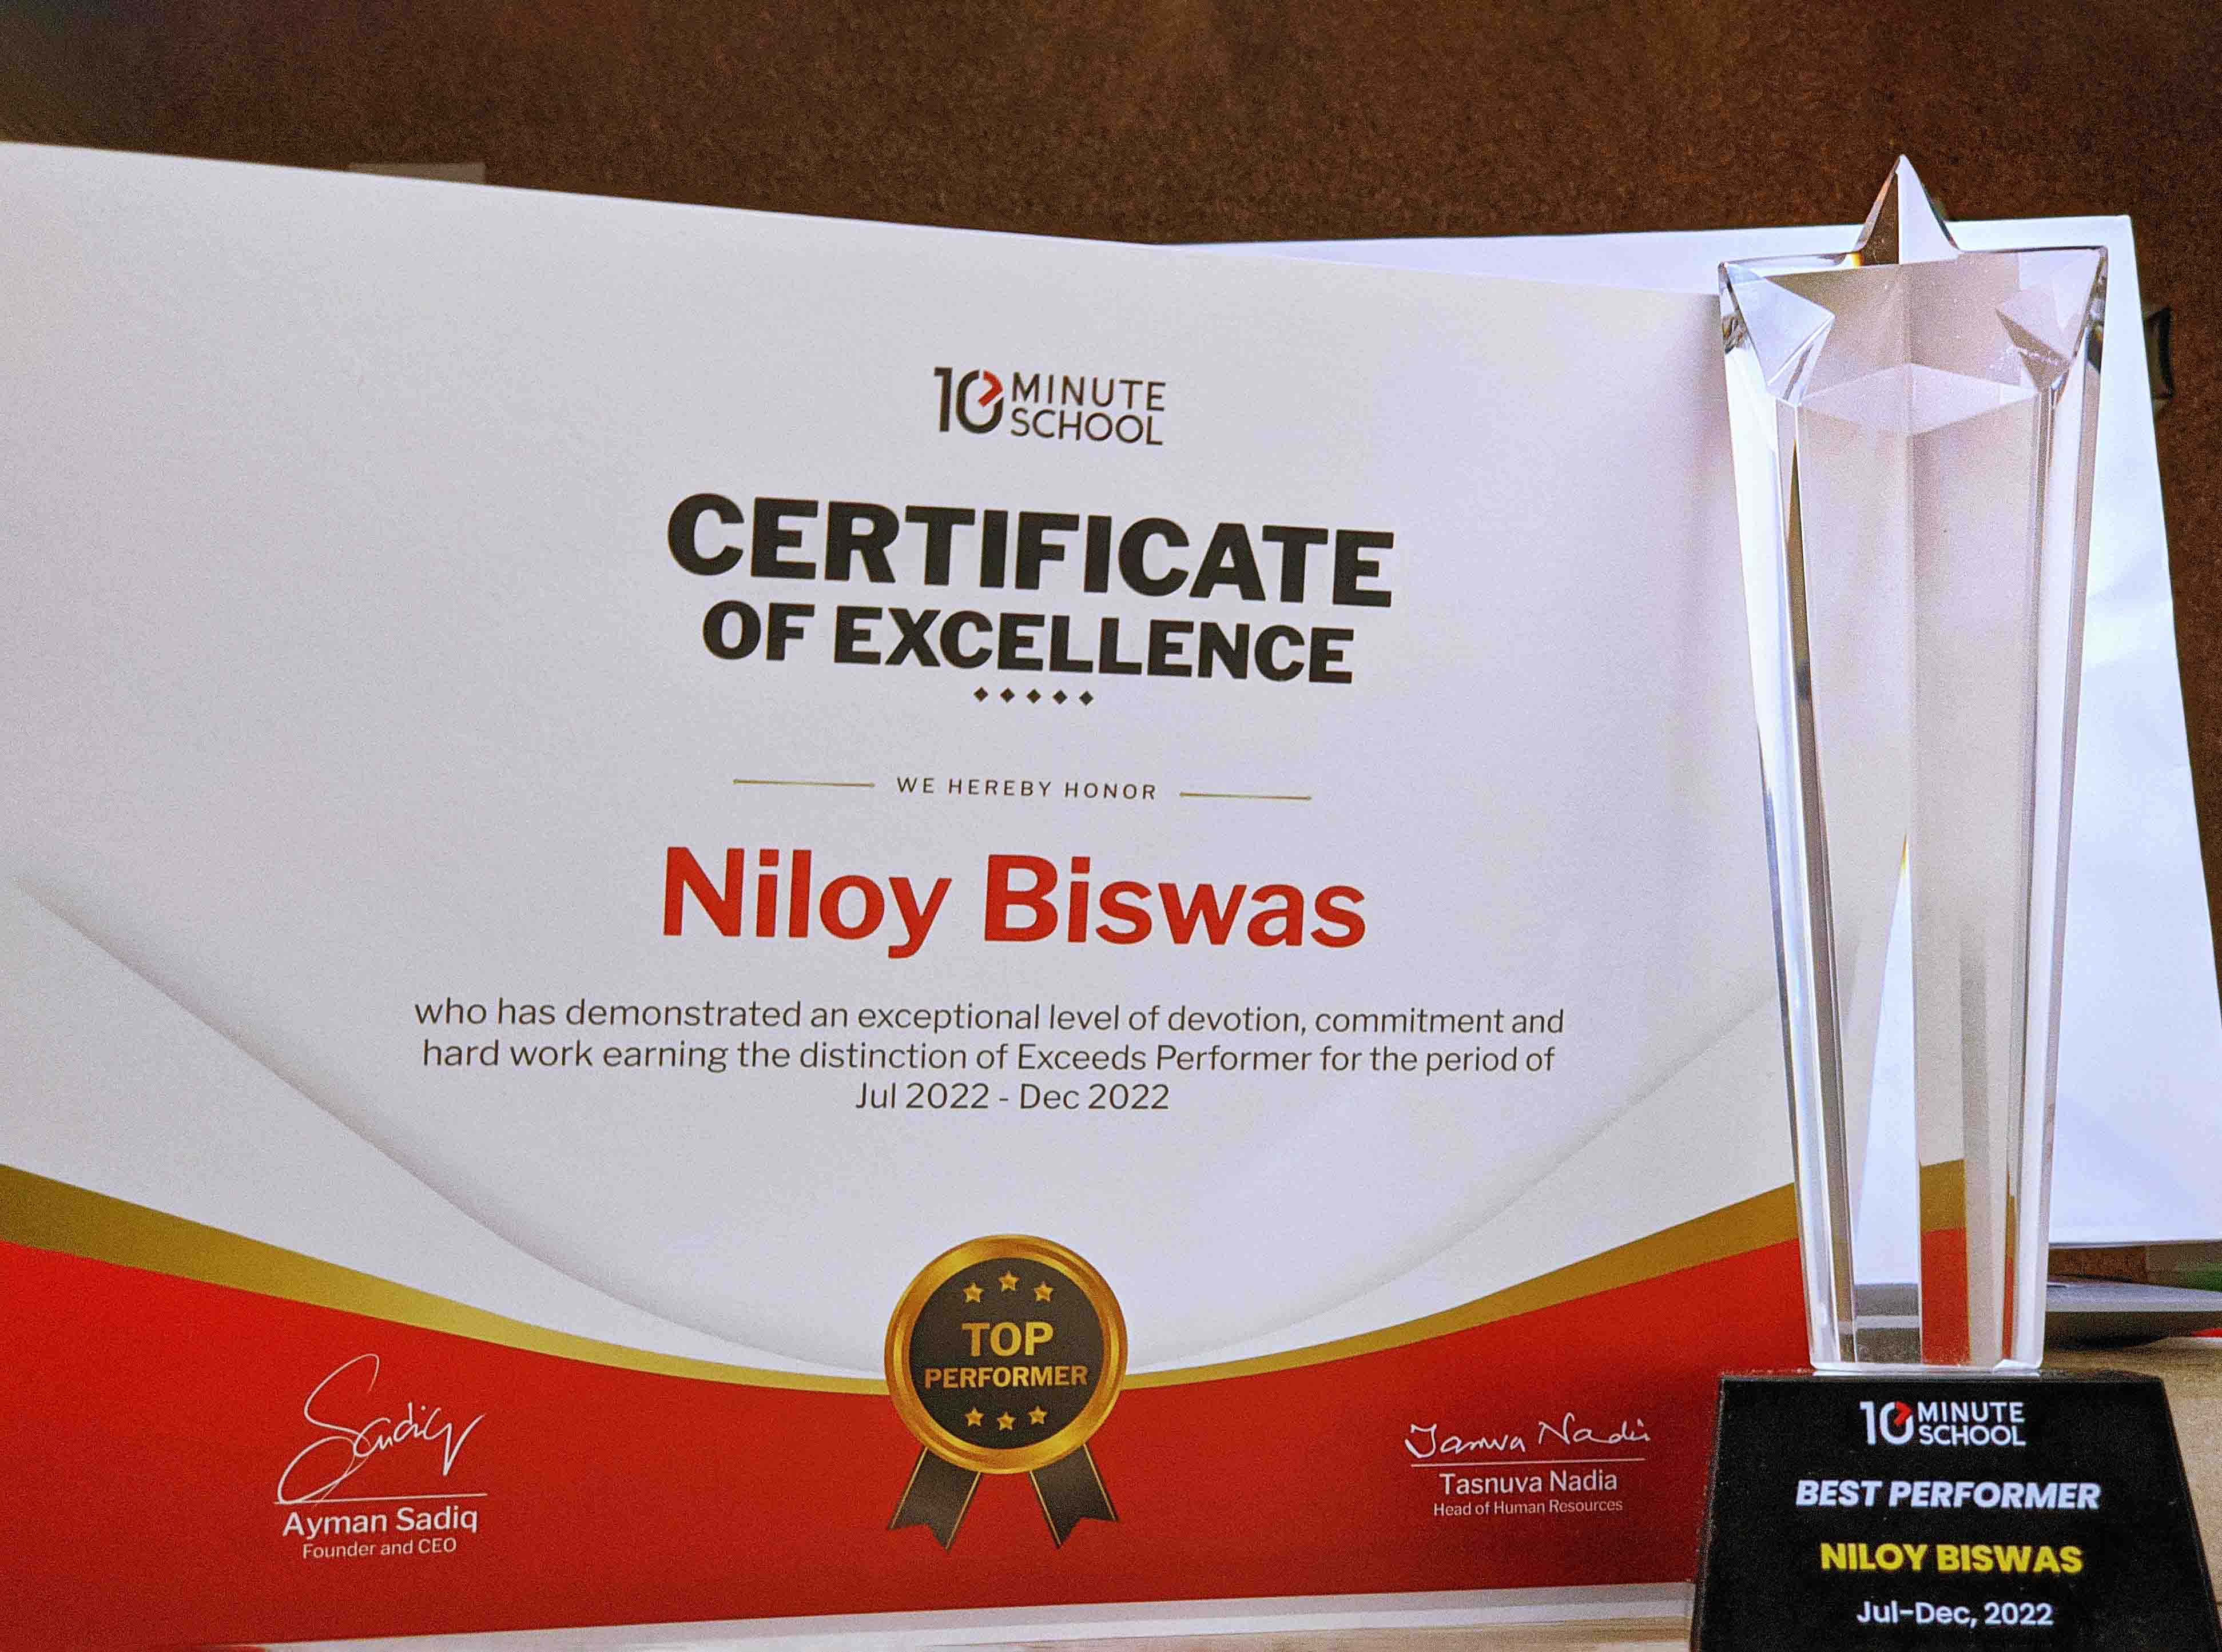 10 Minute School best performer certificate of Niloy Biswas